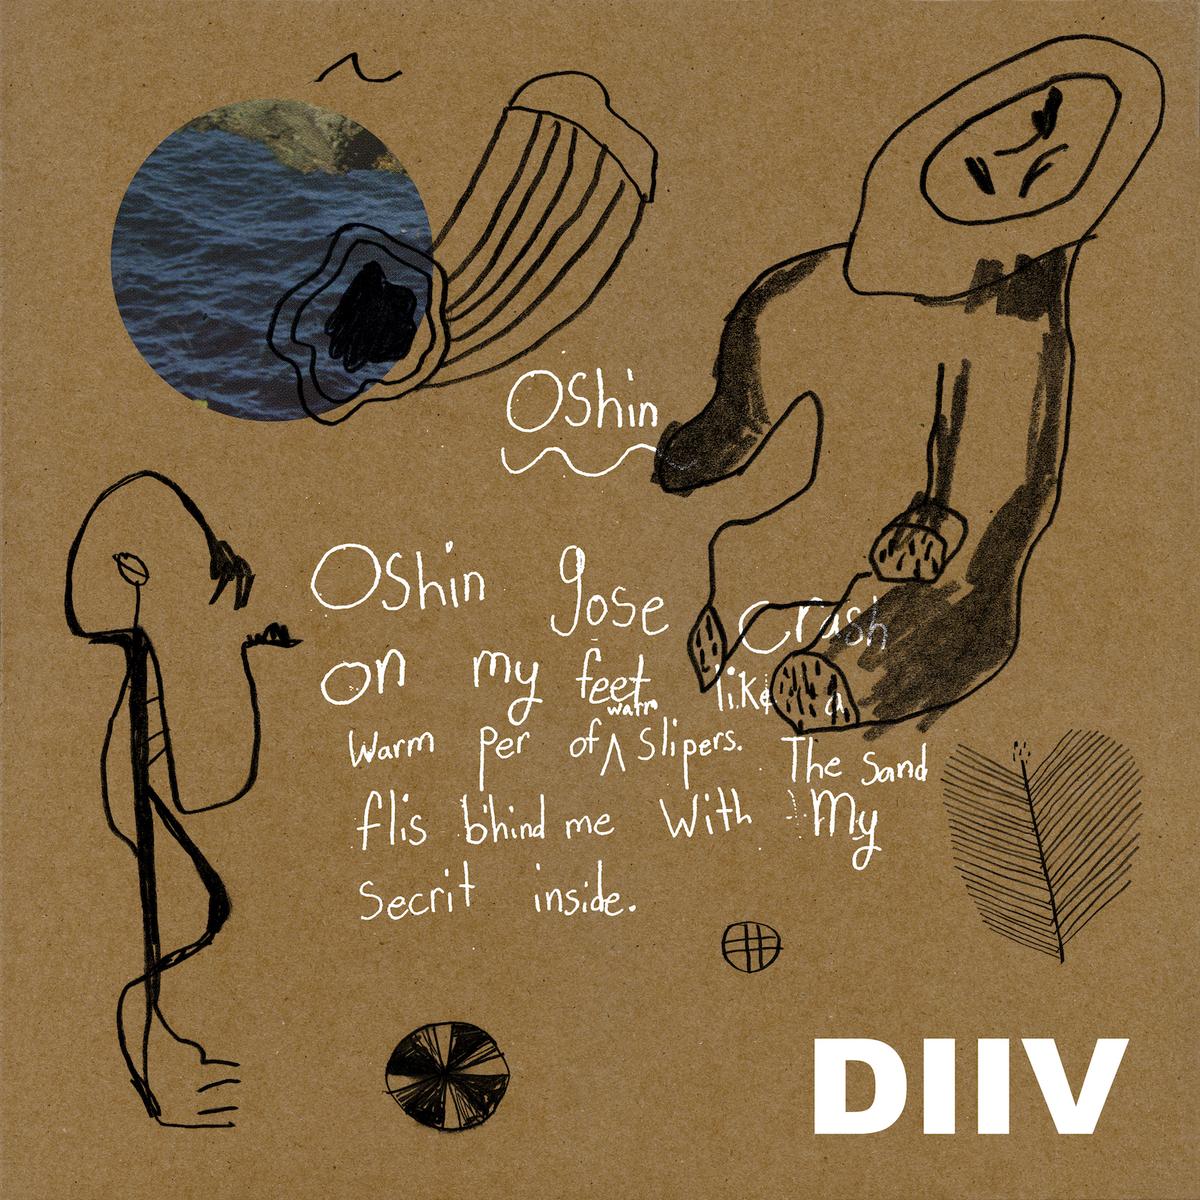 DIIV - OSHIN - 10th Anniversary Reissue (+